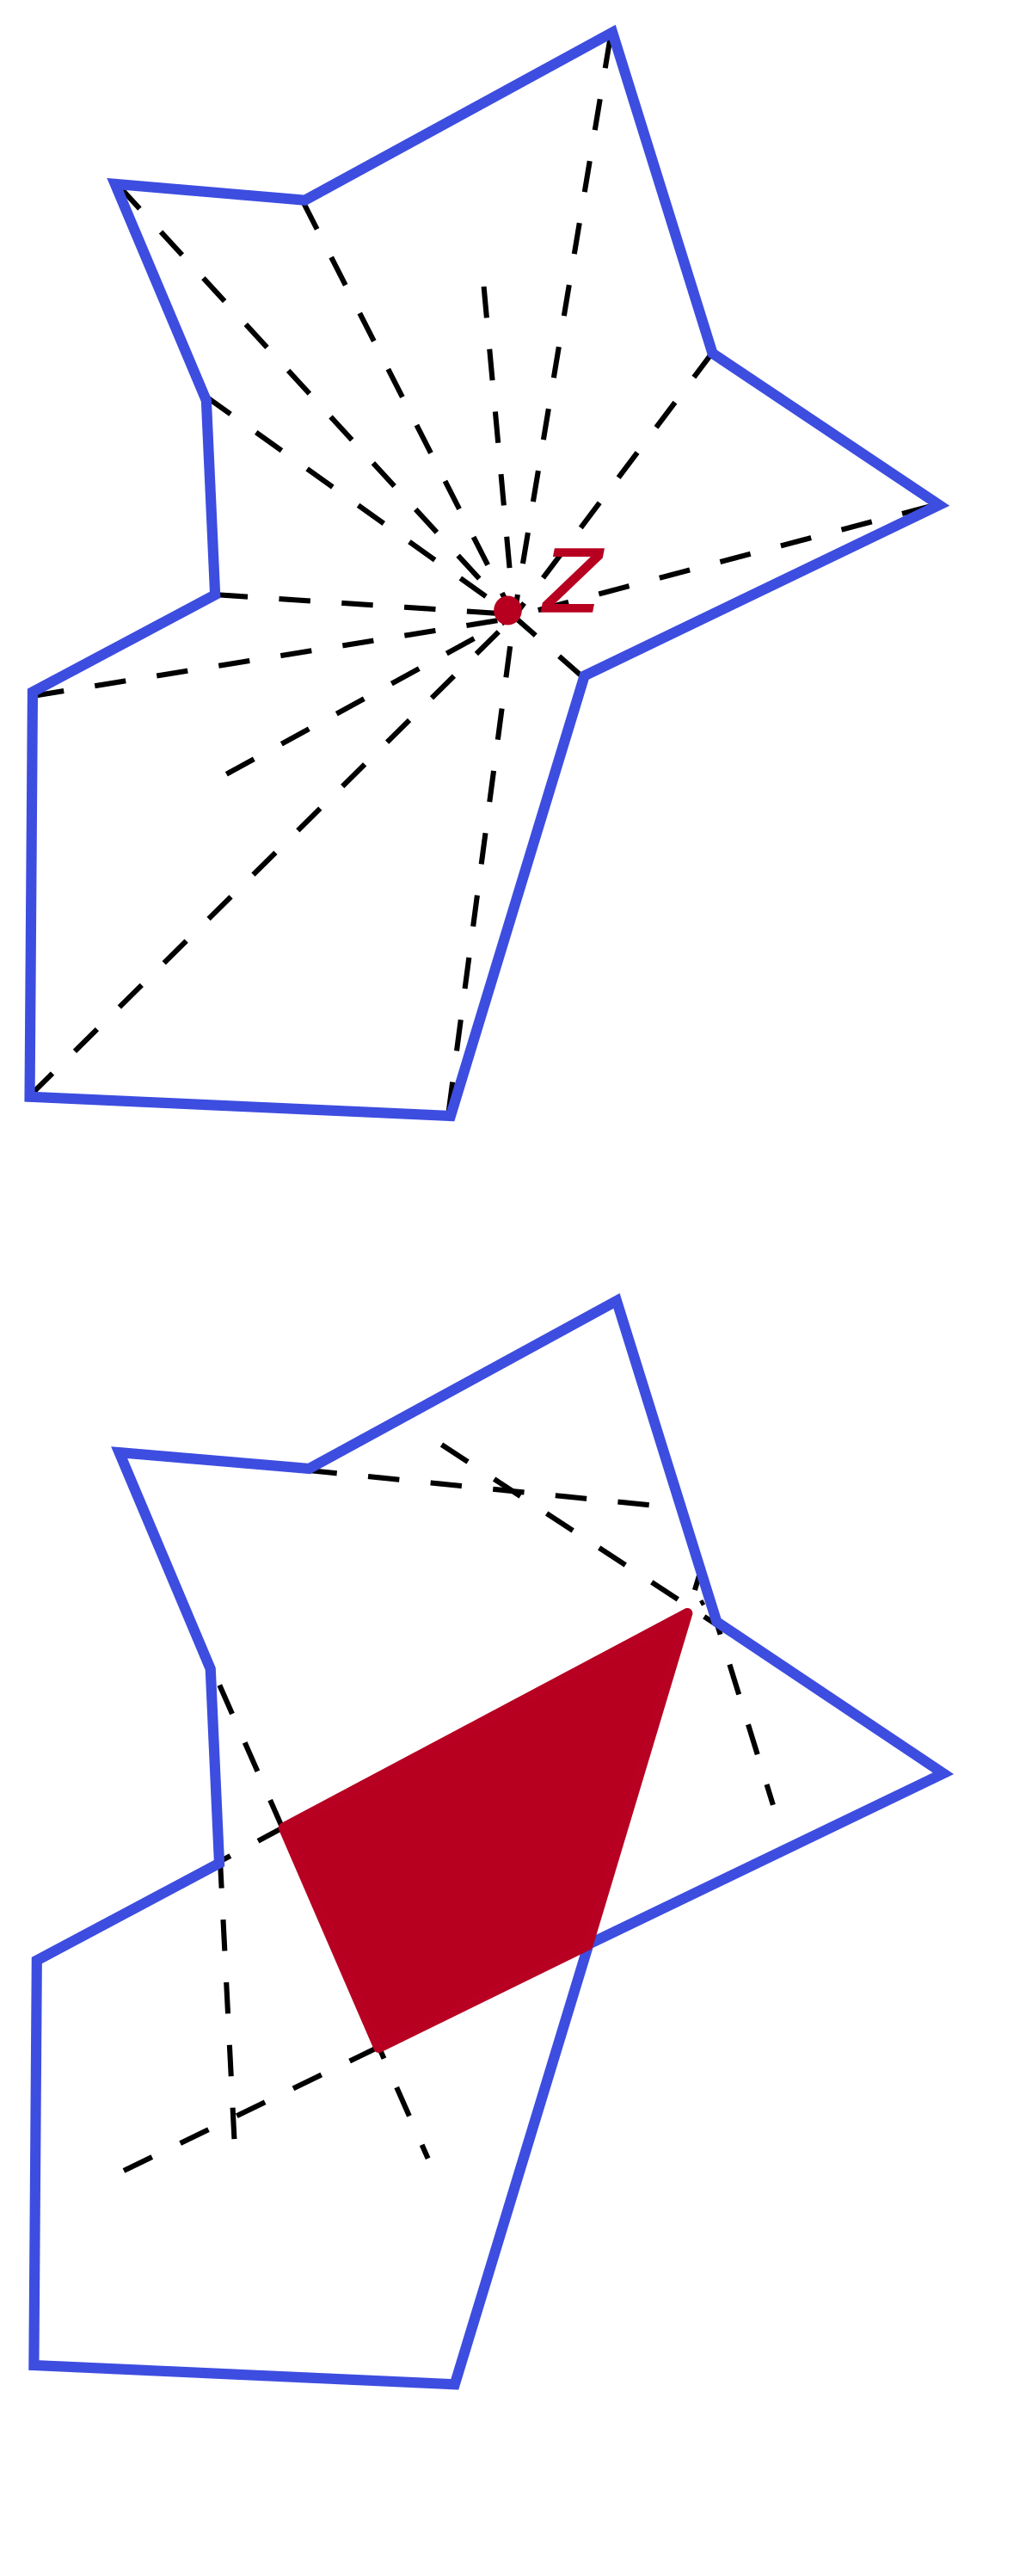 Star polygon - Wikipedia